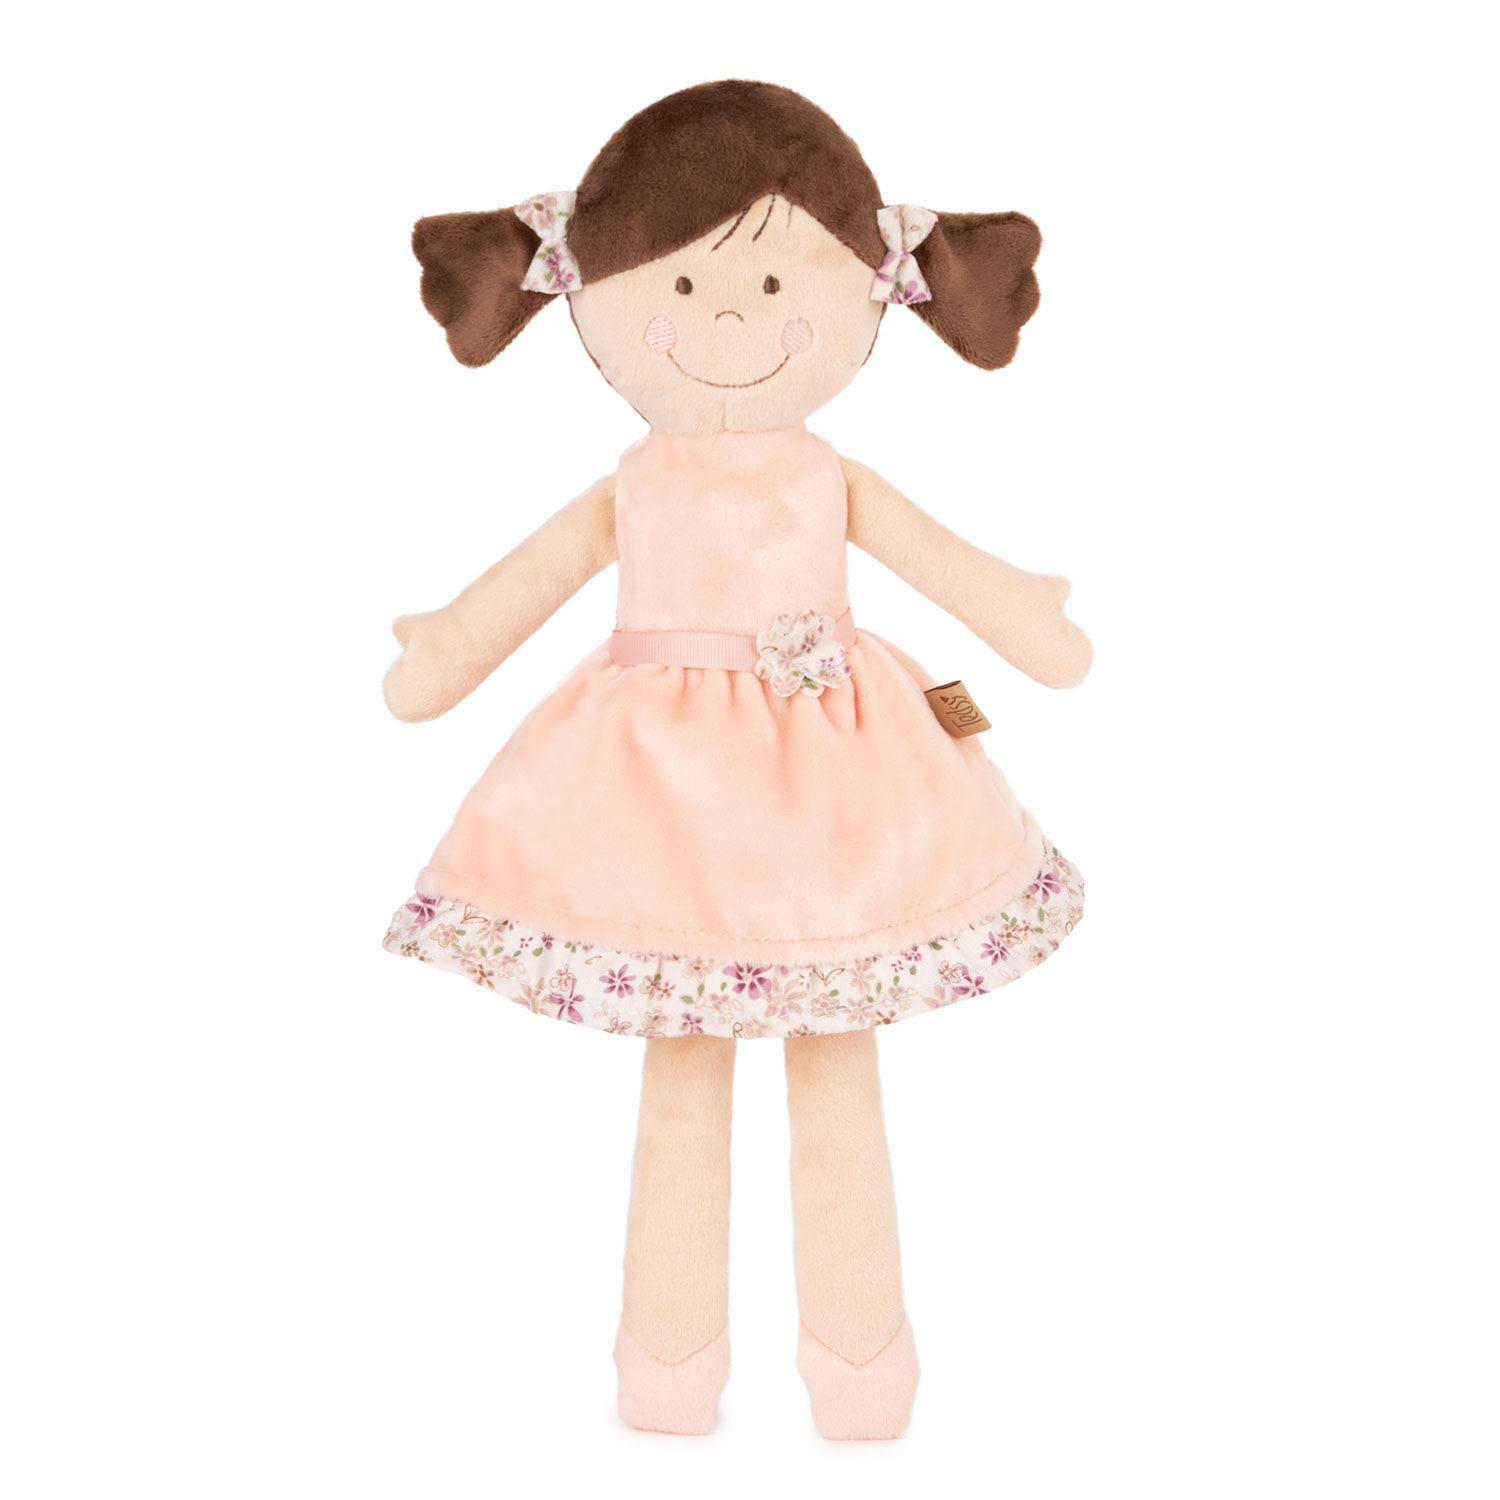 Baby doll Carmen